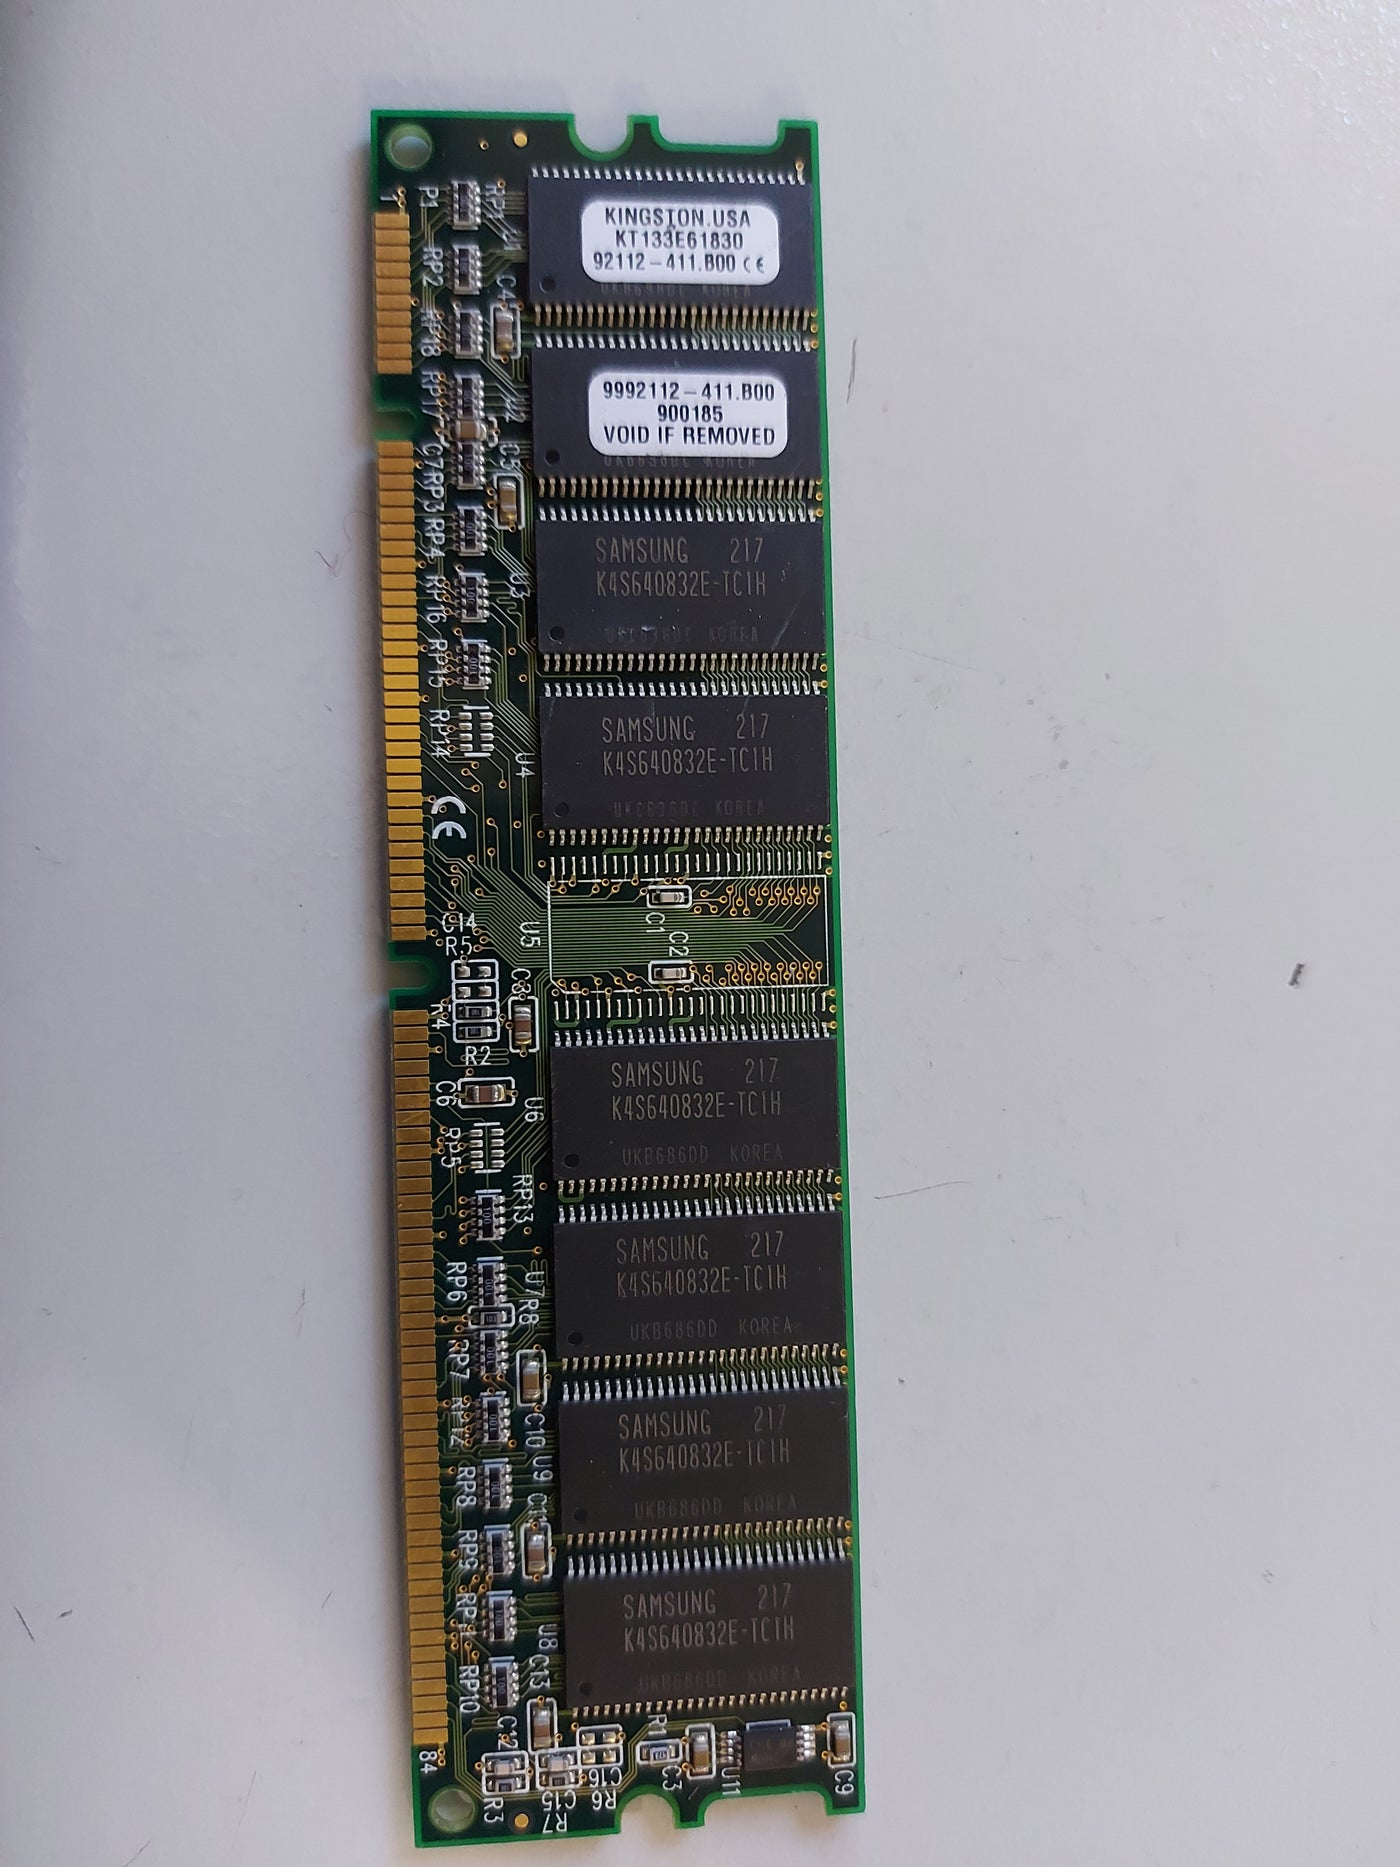 Kingston 128MB PC133 DDR SDRAM DIMM Memory (KT133E61830